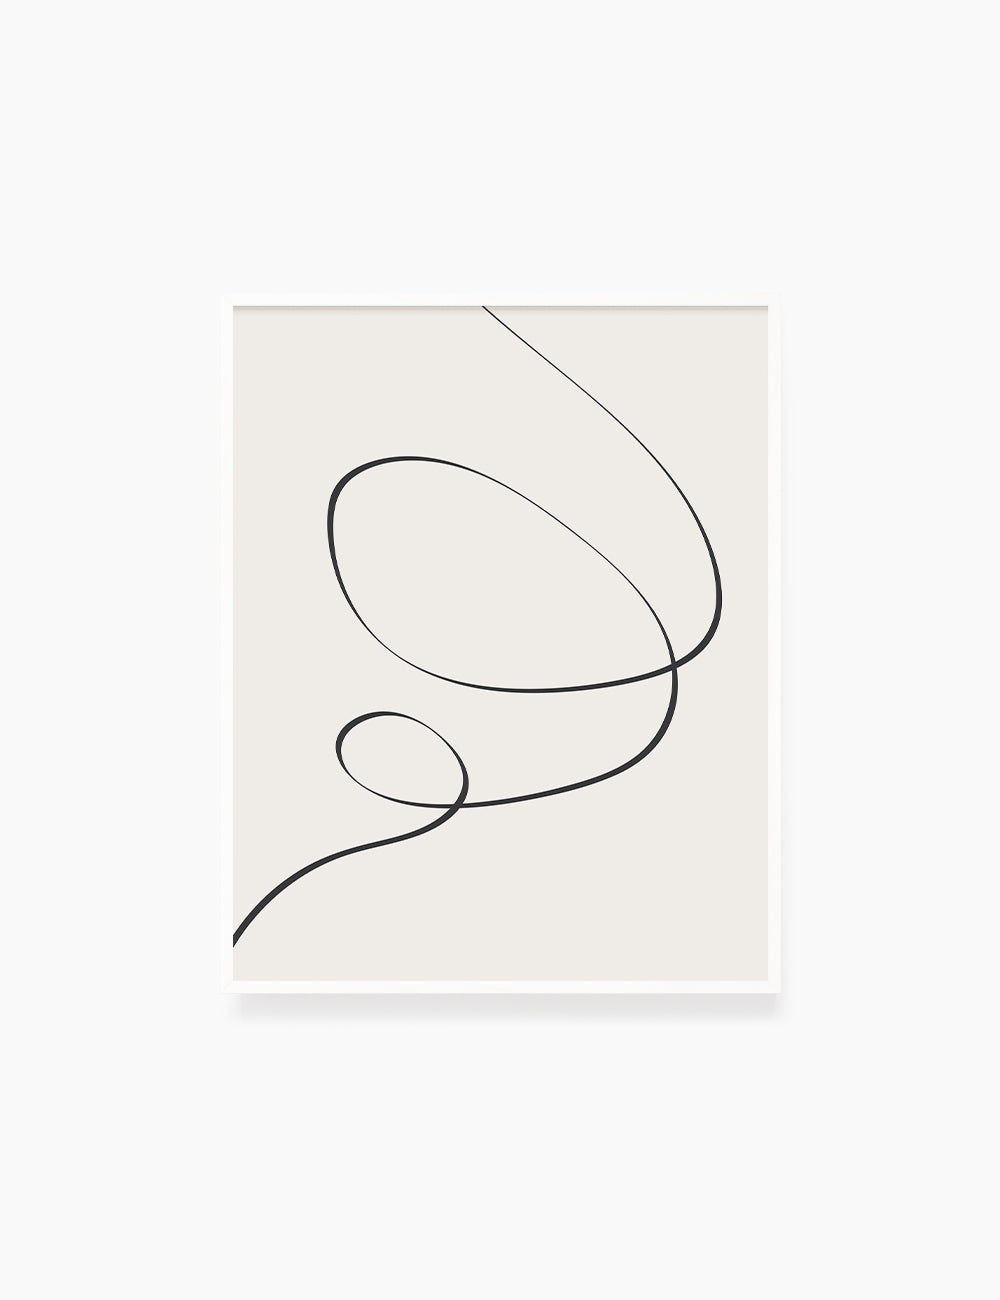 MINIMAL LINE ART. Abstract Swirl Shape. Boho Aesthetic. Beige. Black. Printable Wall Art Illustration. - PAPER MOON Art & Design